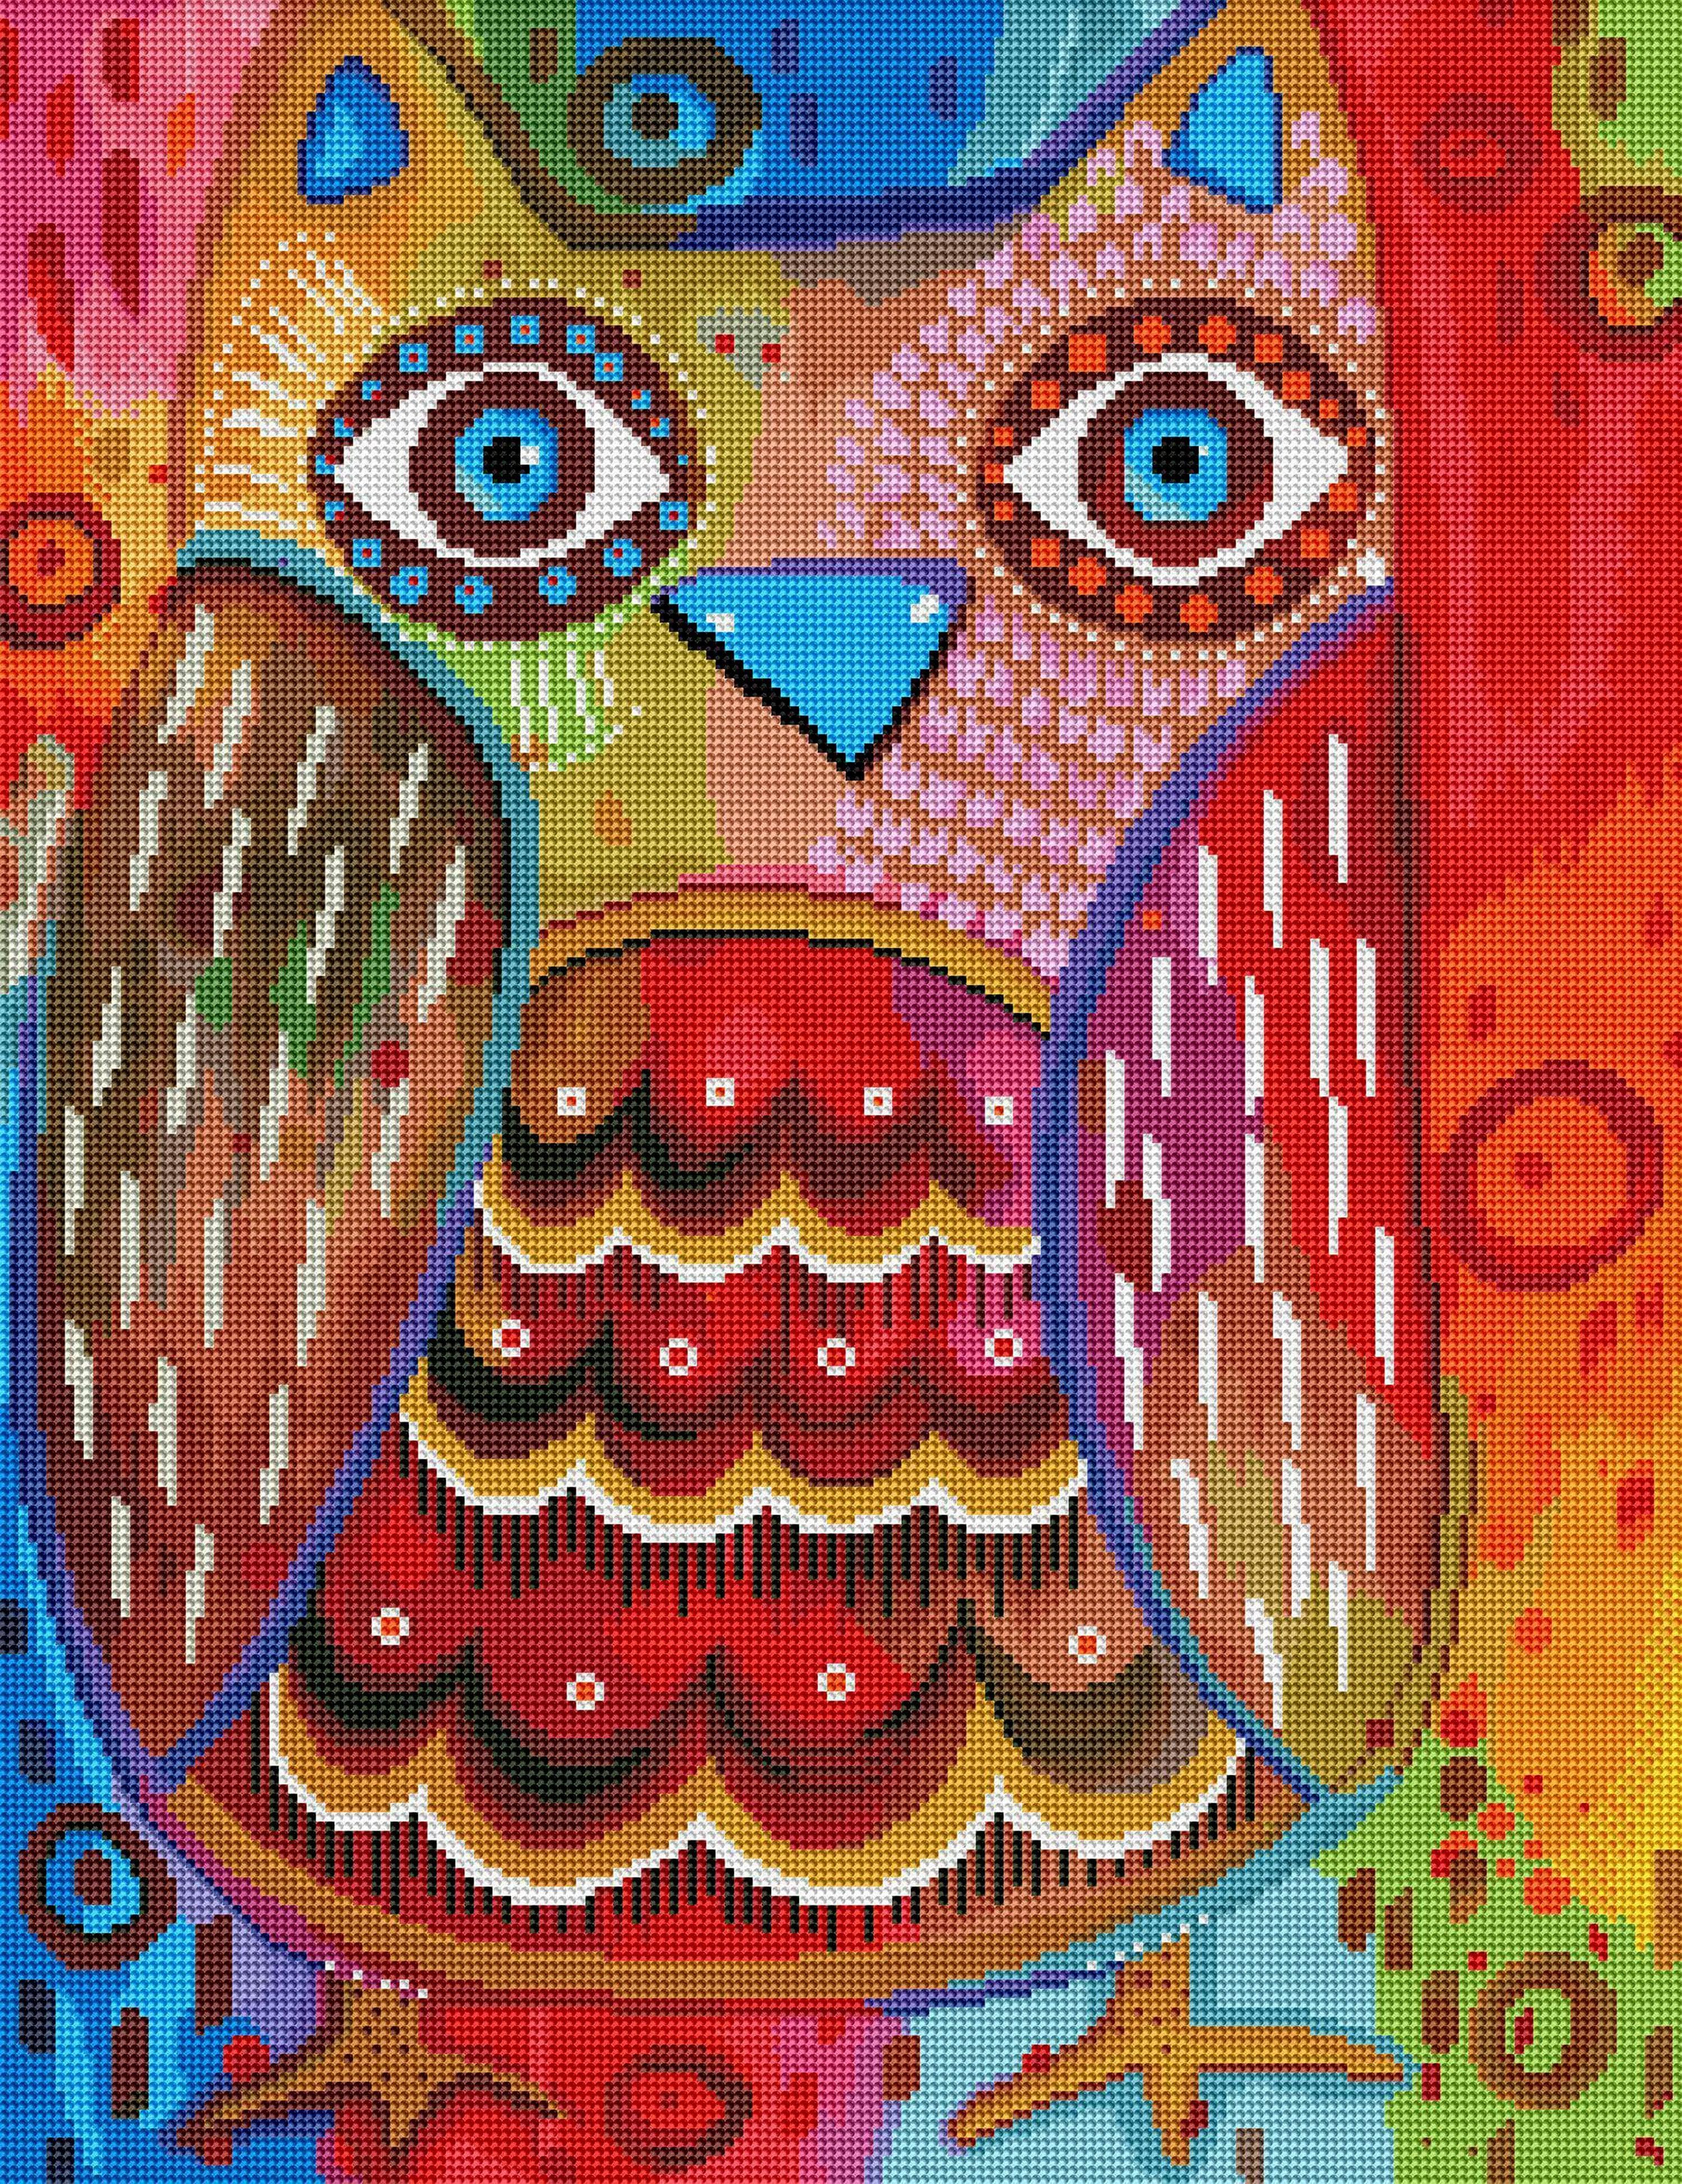 The Great Big Owl – Diamond Art Club